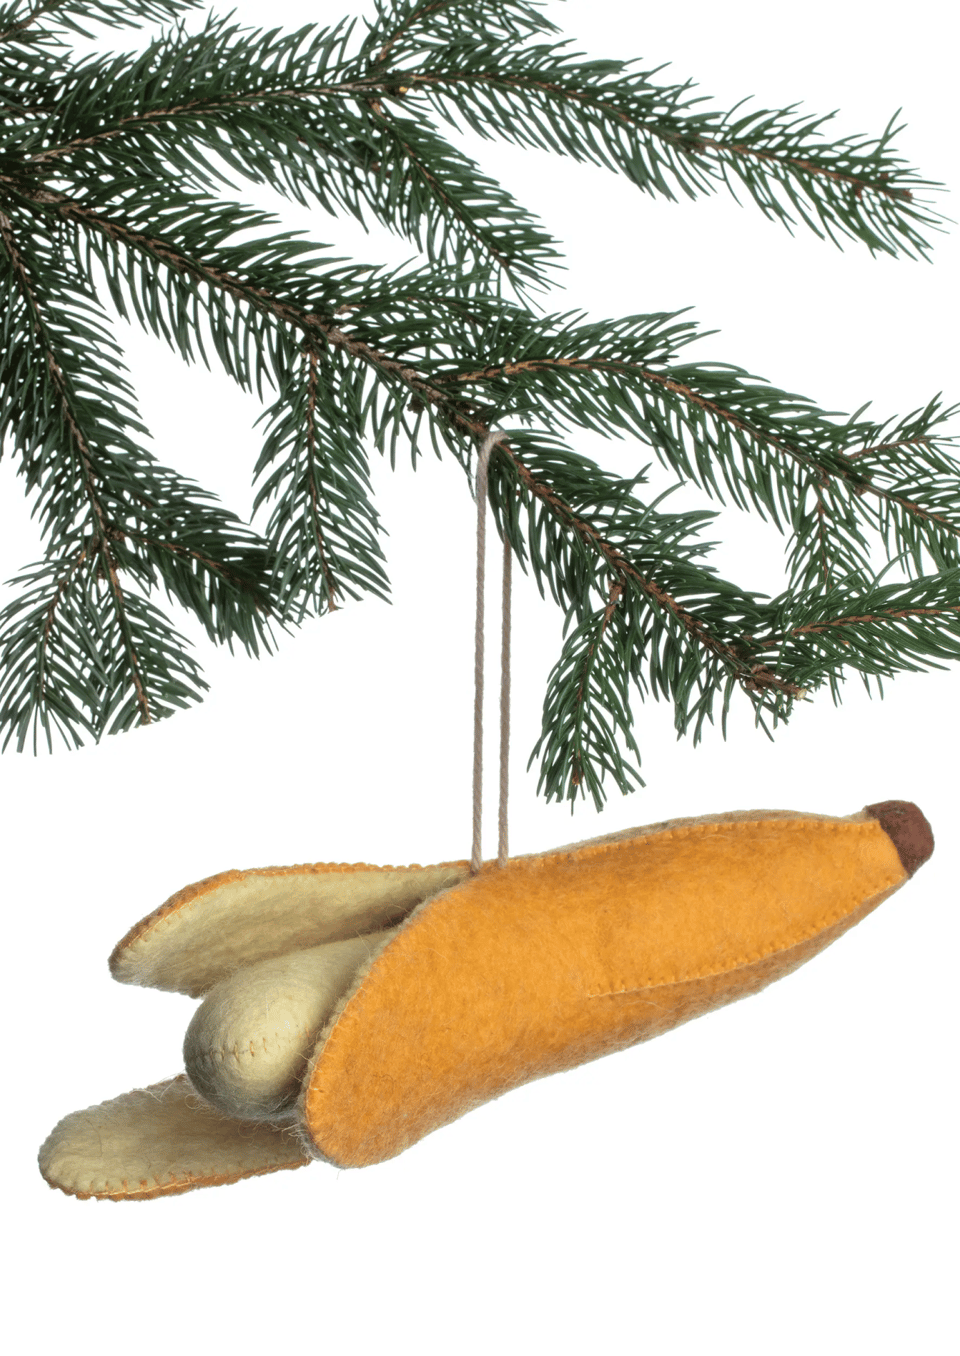 Banana Ornament image